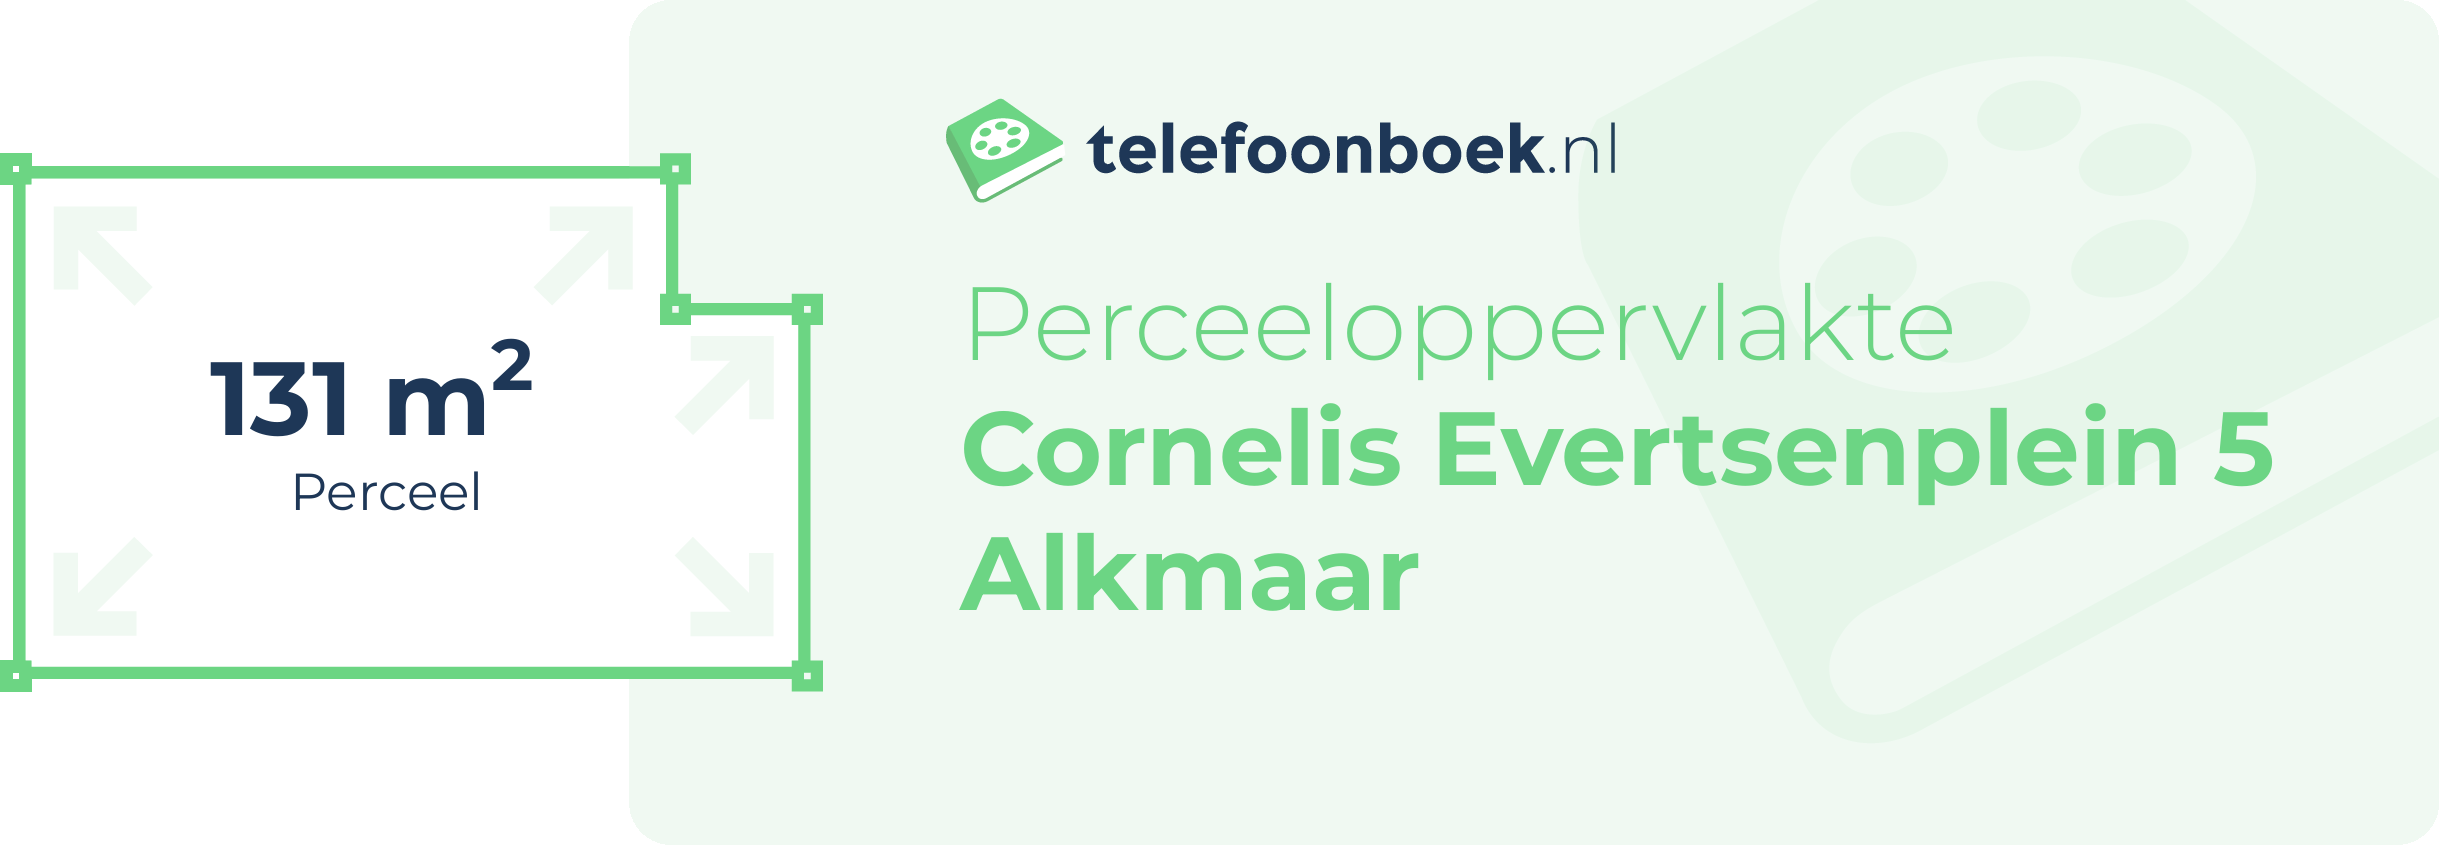 Perceeloppervlakte Cornelis Evertsenplein 5 Alkmaar